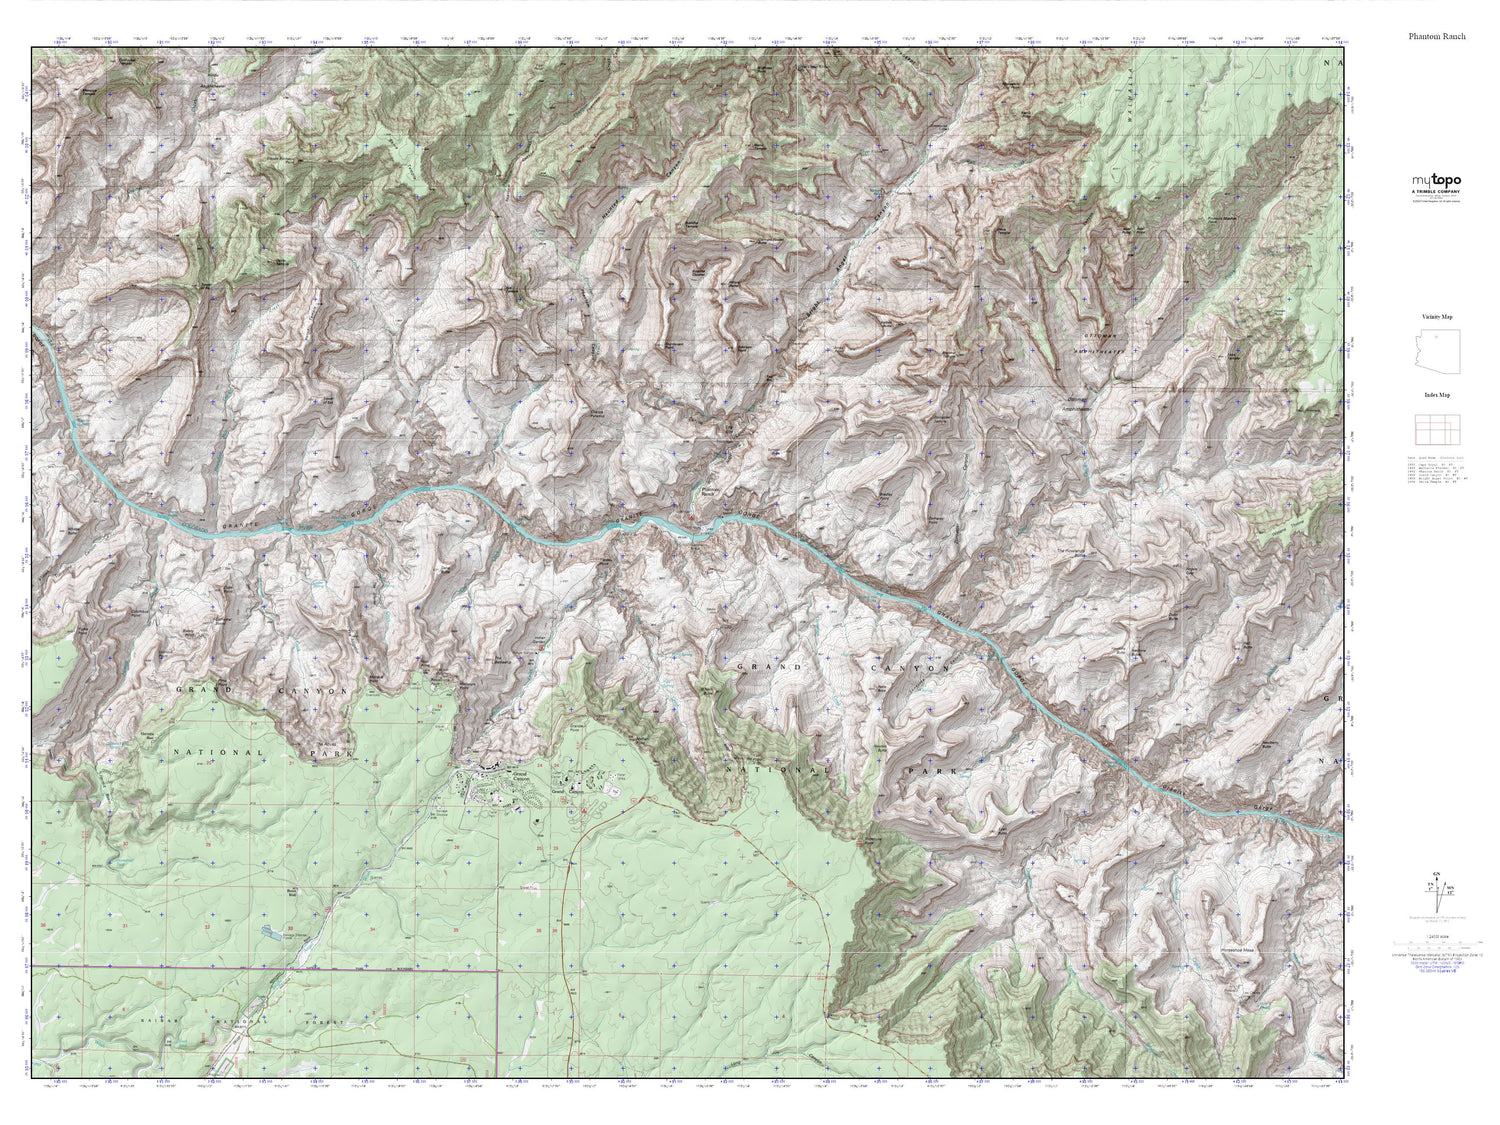 Phantom Ranch MyTopo Explorer Series Map Image